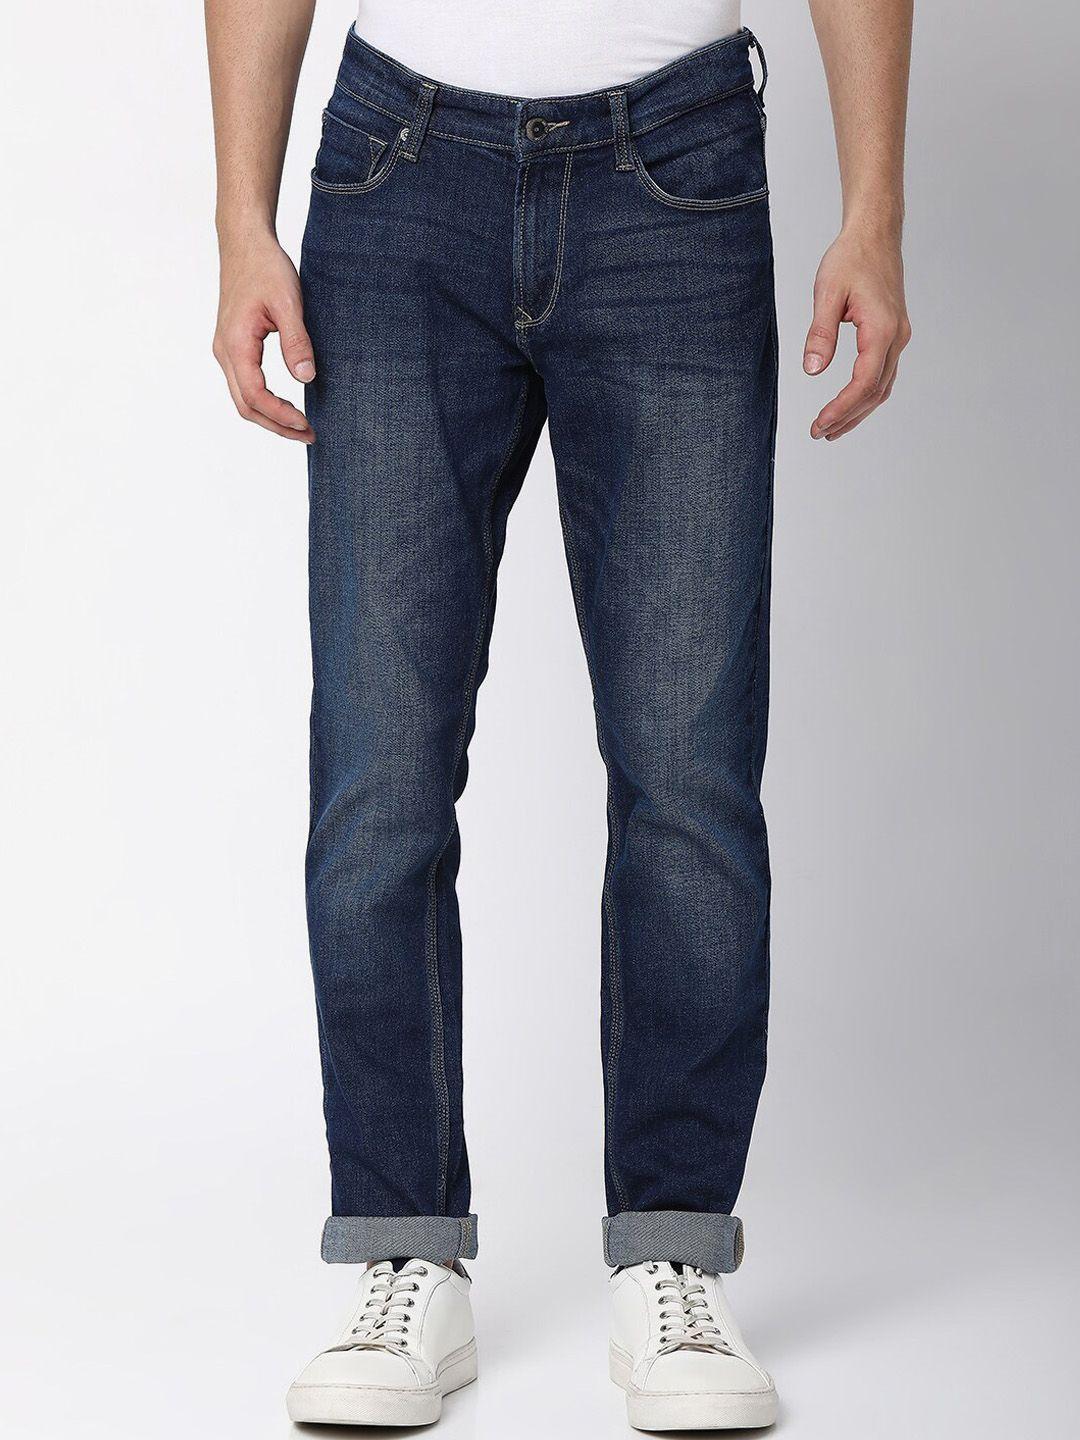 spykar-men-blue-tapered-fit-light-fade-jeans